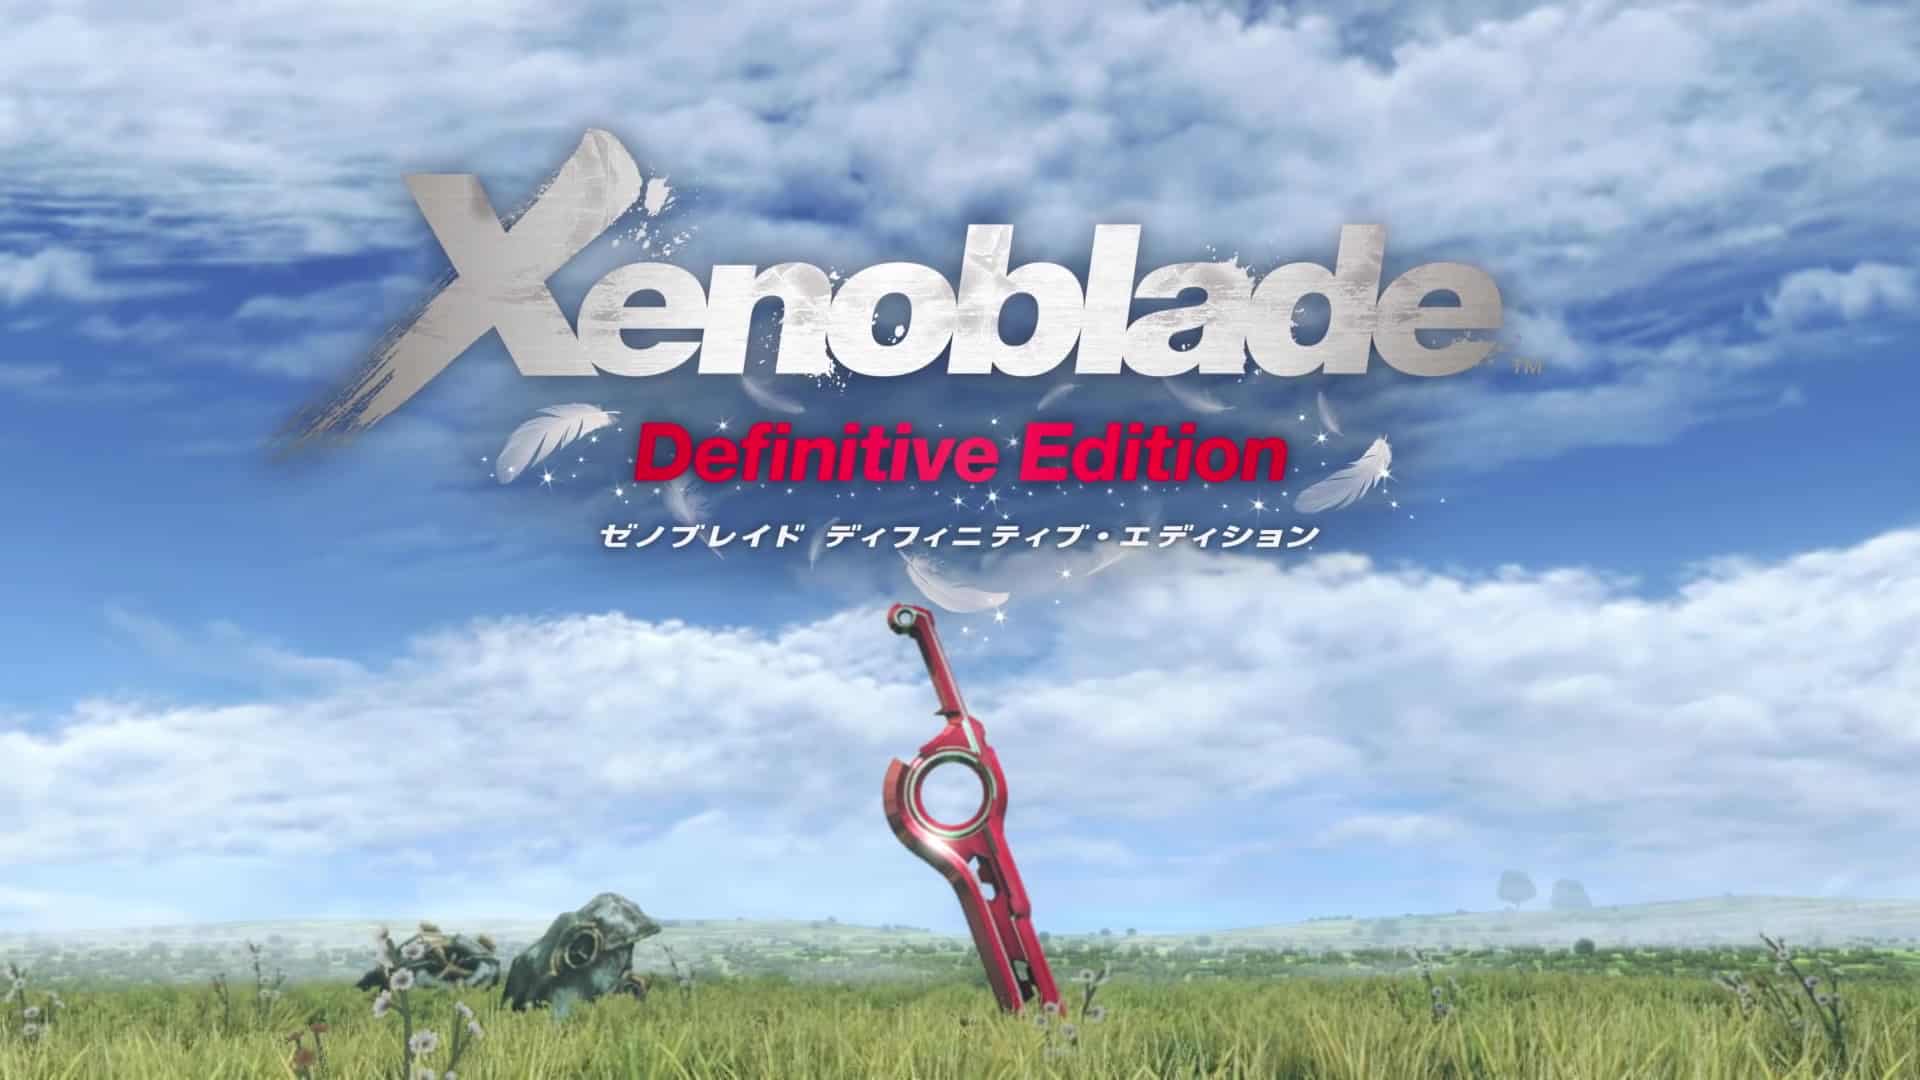 Xenoblade Chronicles Definitive Edition 7